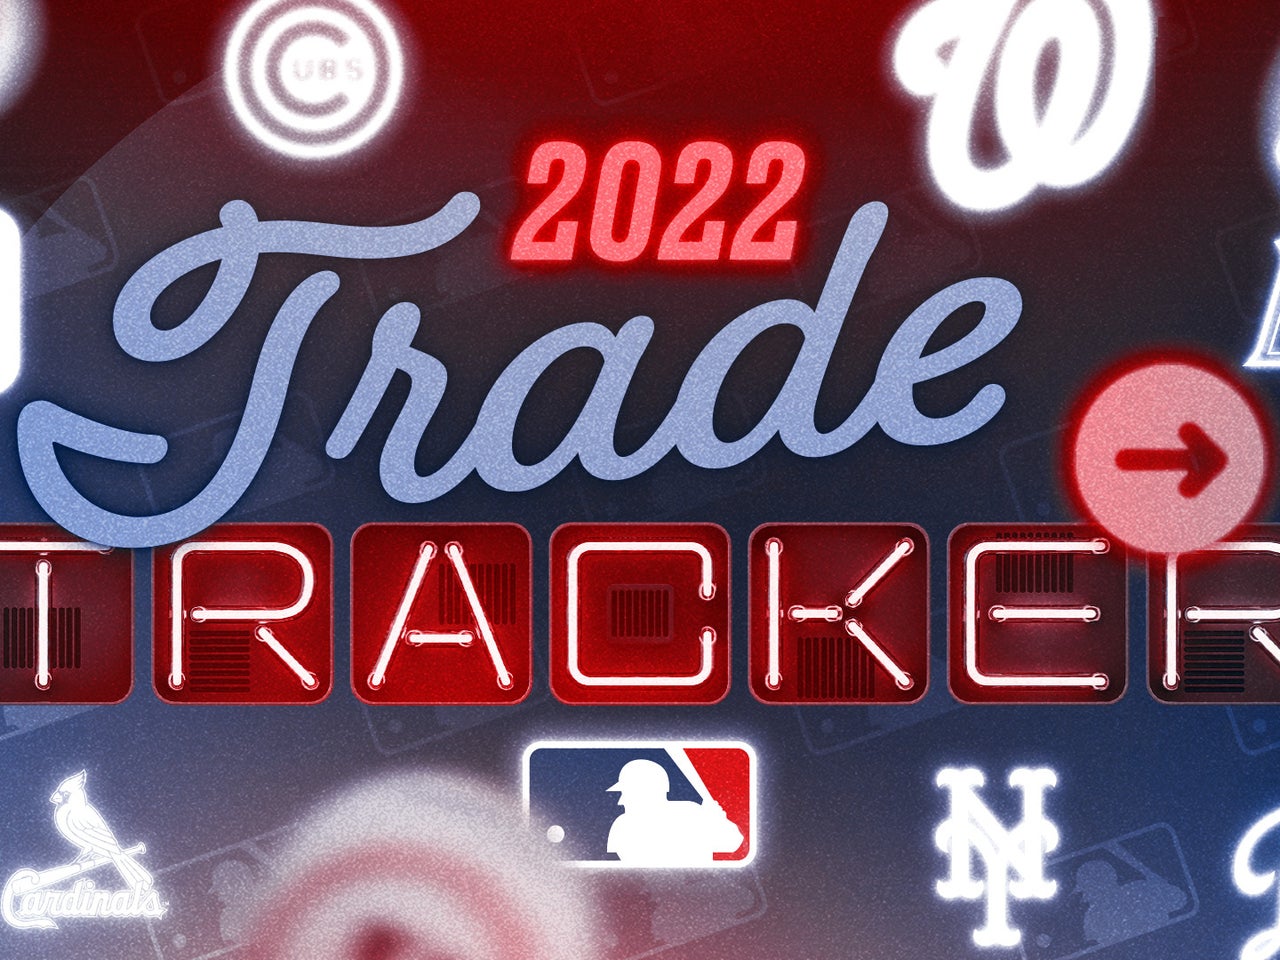 Trey Mancini trade details: Astros acquire los angeles lakers